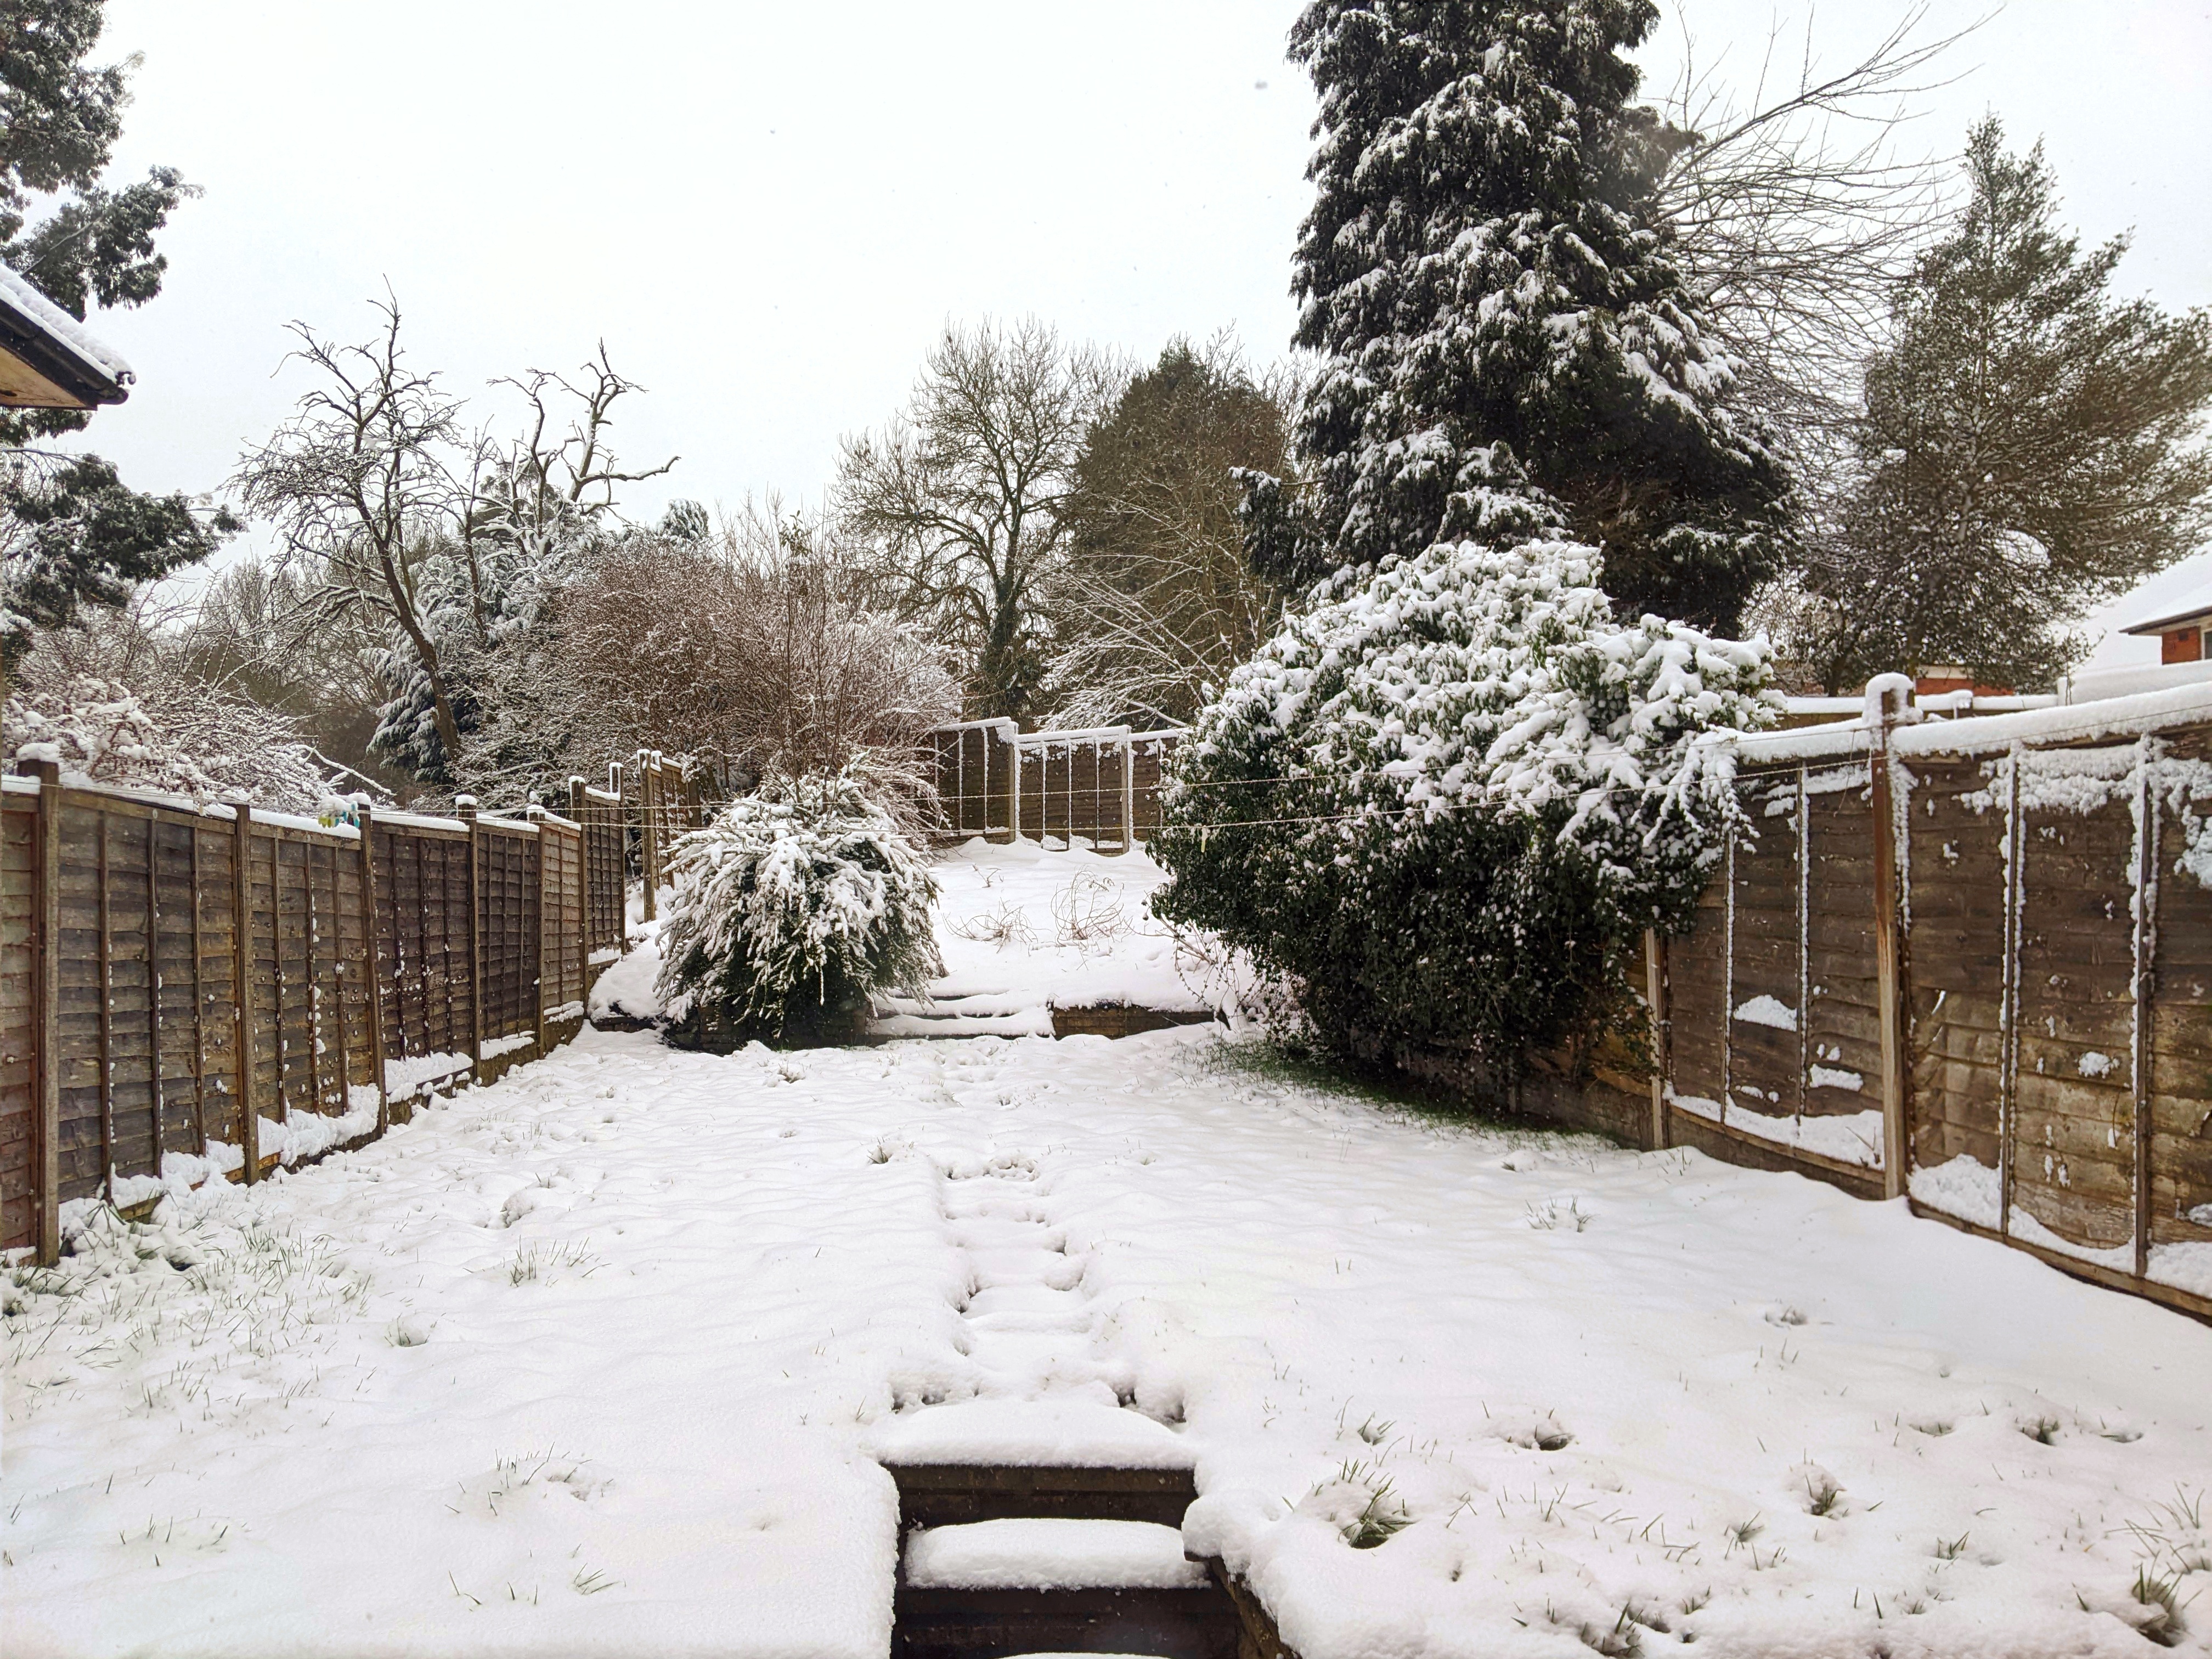 Snow in the garden